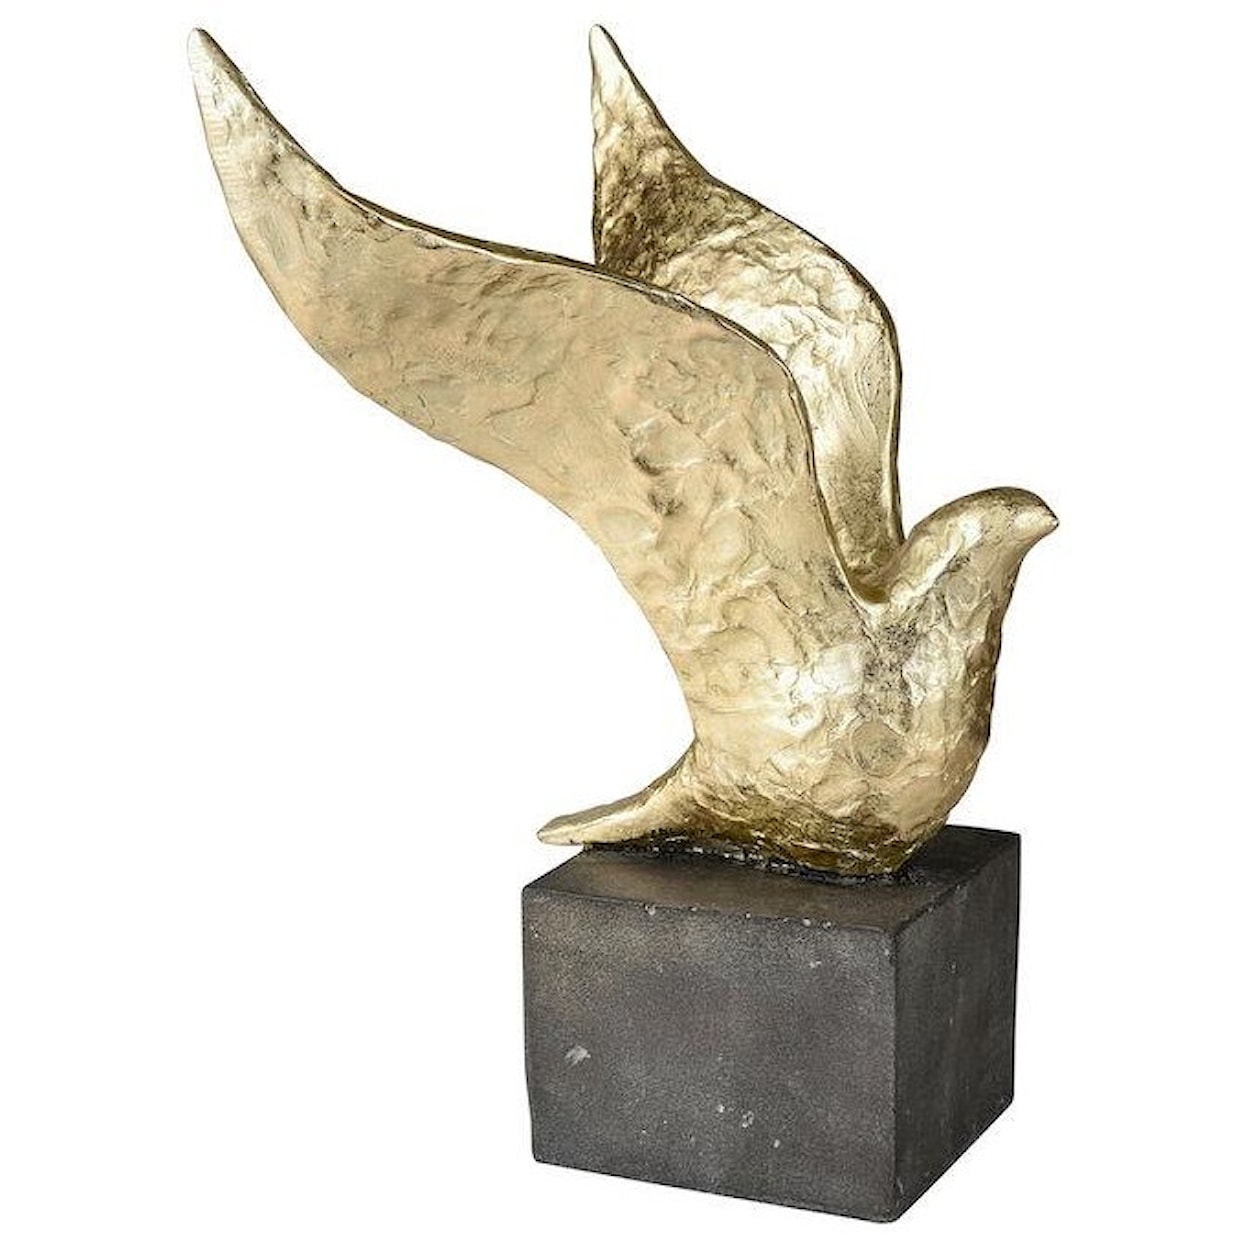 Elk Home DECORATIVE Winged Bird Sculpture - Set of 3